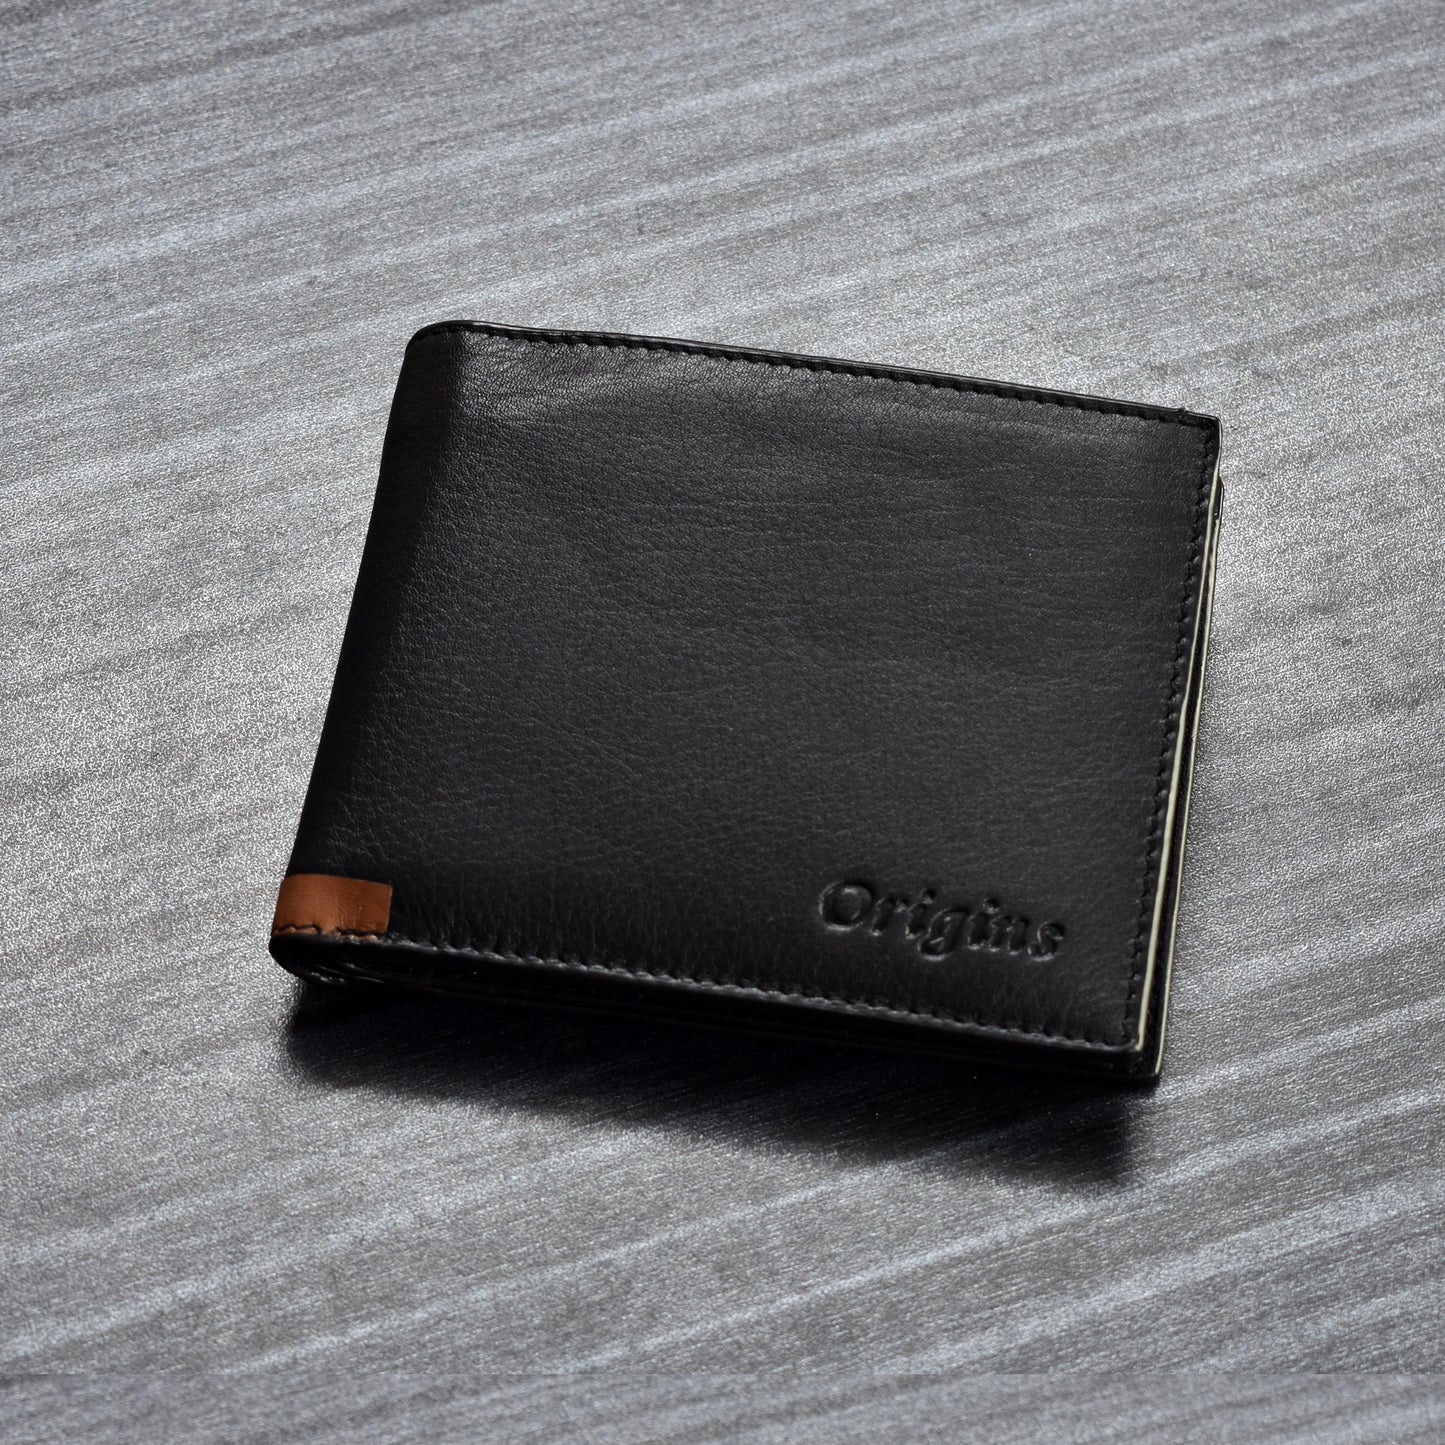 3 Part Pocket Size Premium Quality Leather Wallet for Men | ORGN Wallet 02